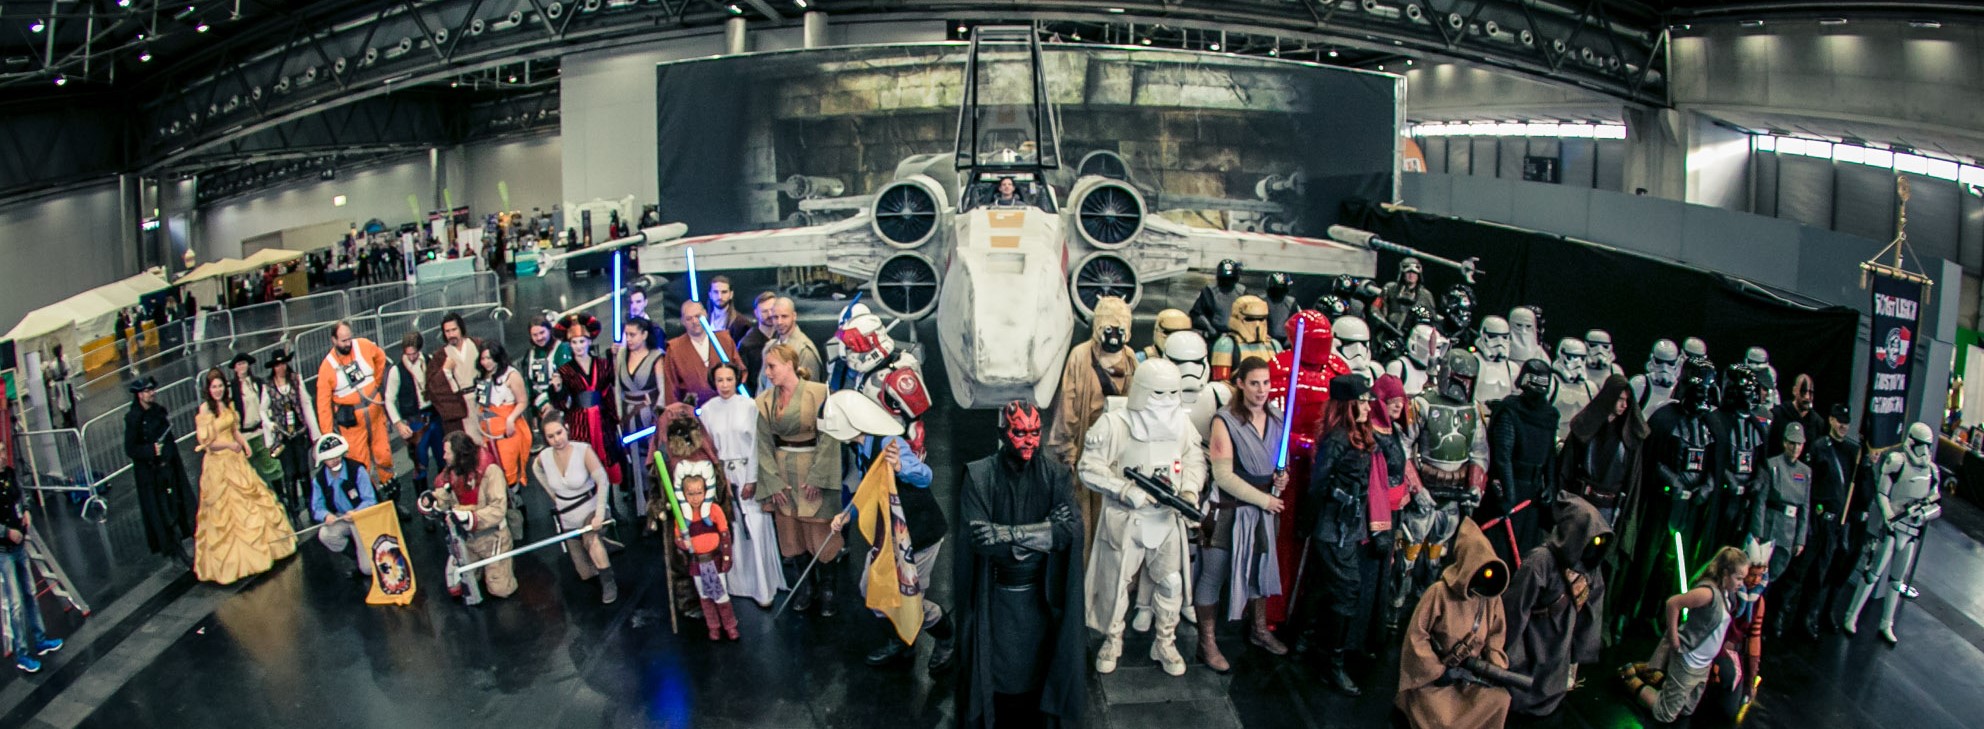 fan group star wars people x-wing stormtroopers darth varder princess prop photo-op 501st VIECC® Messe